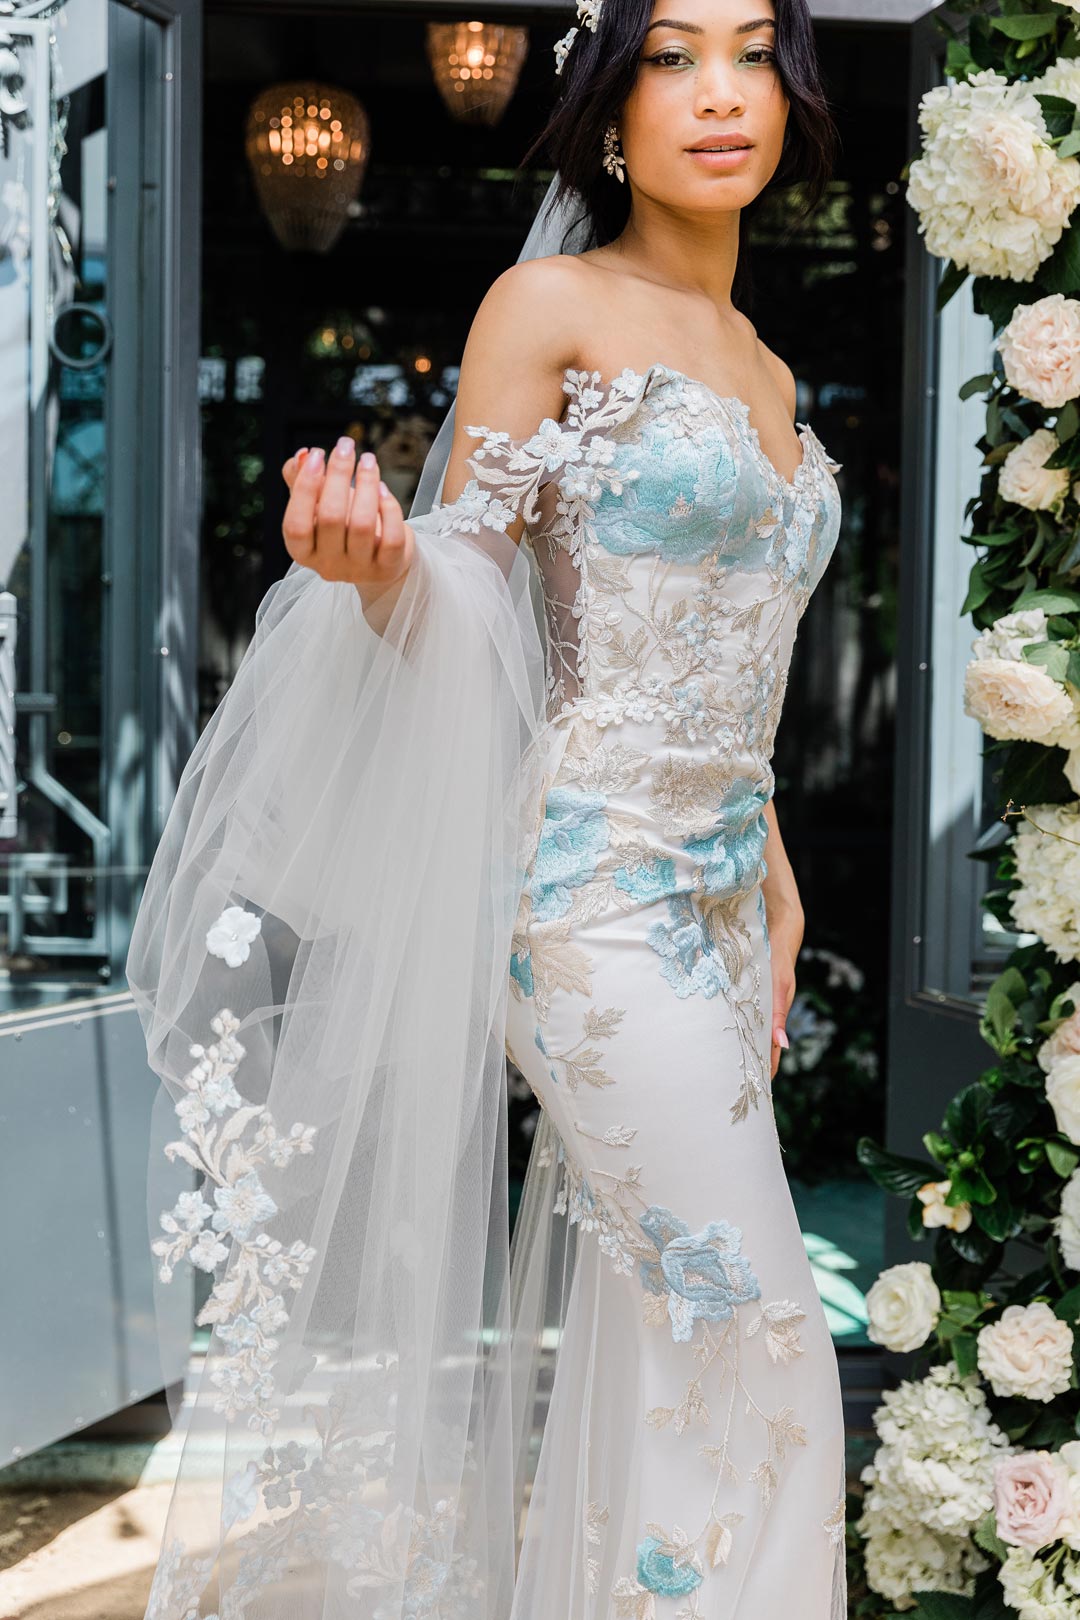 Bride holding Wedding veil in Odessa Blue designed by Claire Pettibone